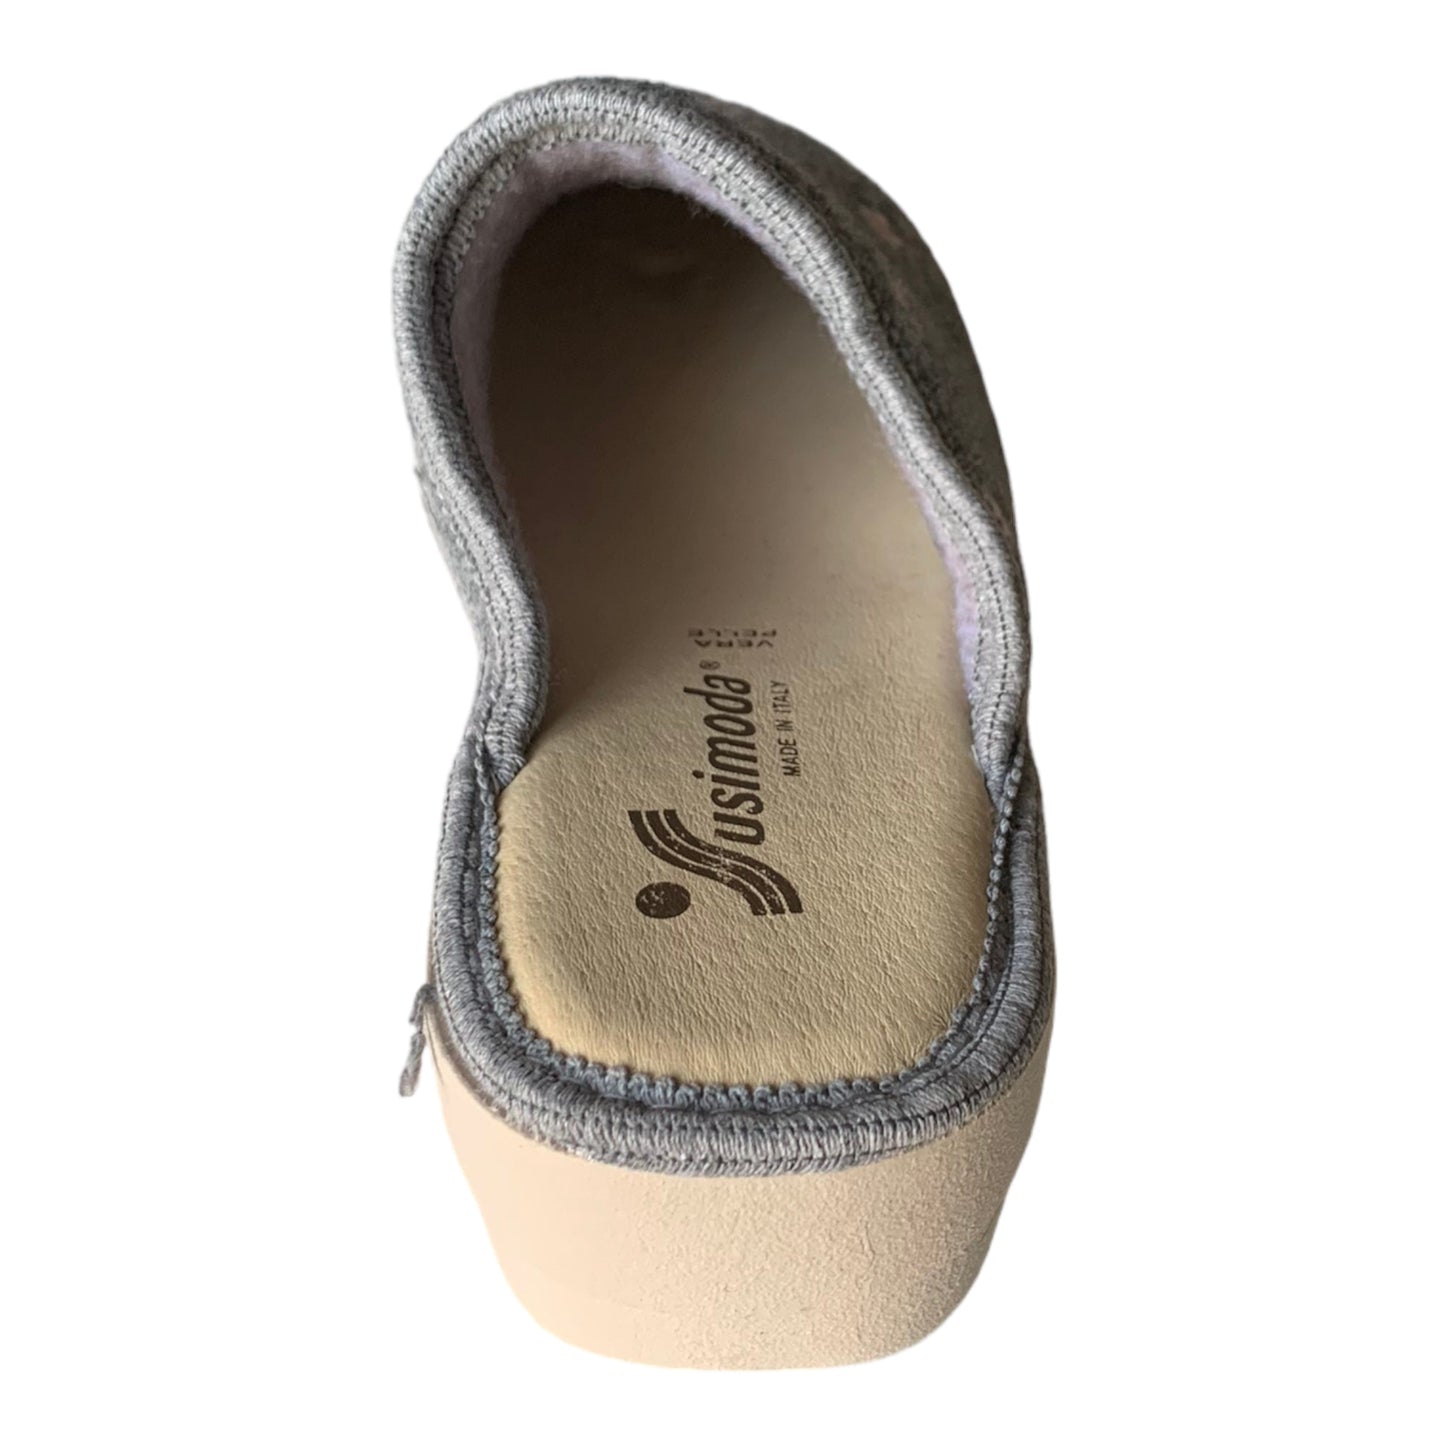 Pantofola donna Susimoda linea comfort 63390